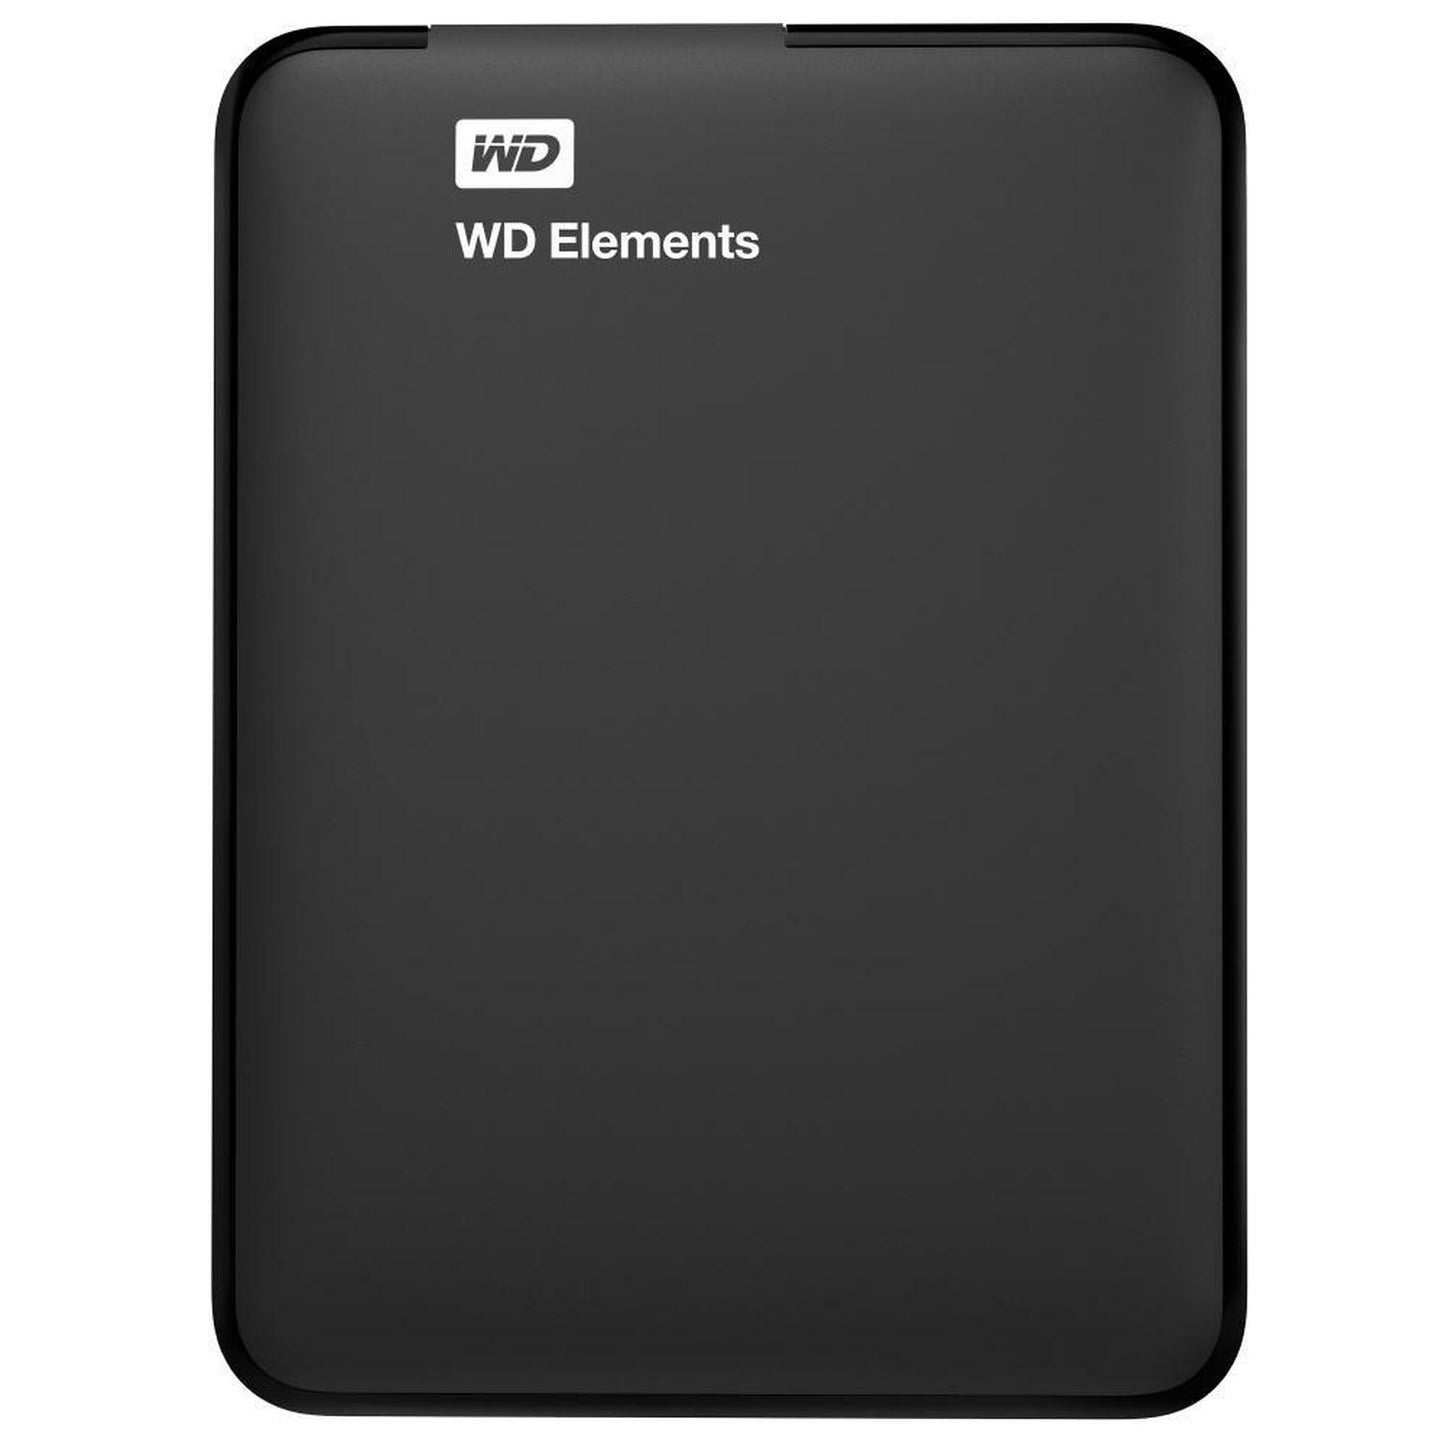 Disco Duro Externo Western Digital WD Elements Portátil 2.5'', 1TB, USB 3.0, Negro - para Mac/PC